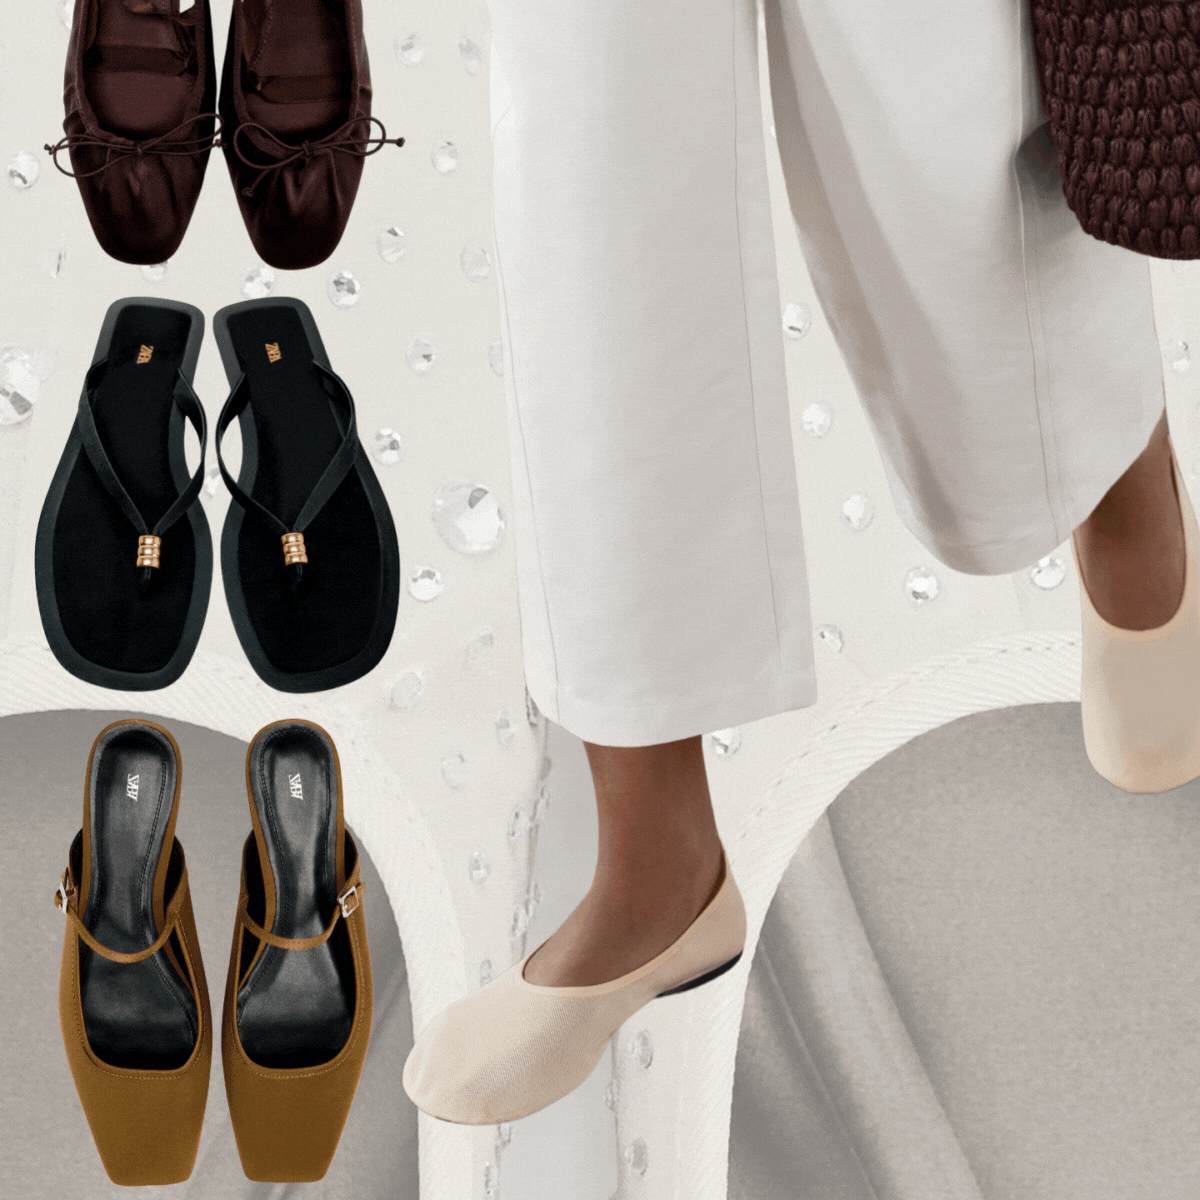 8 Flat-Shoe Trends Zara’s Doing Better Than Anywhere Else Right Now